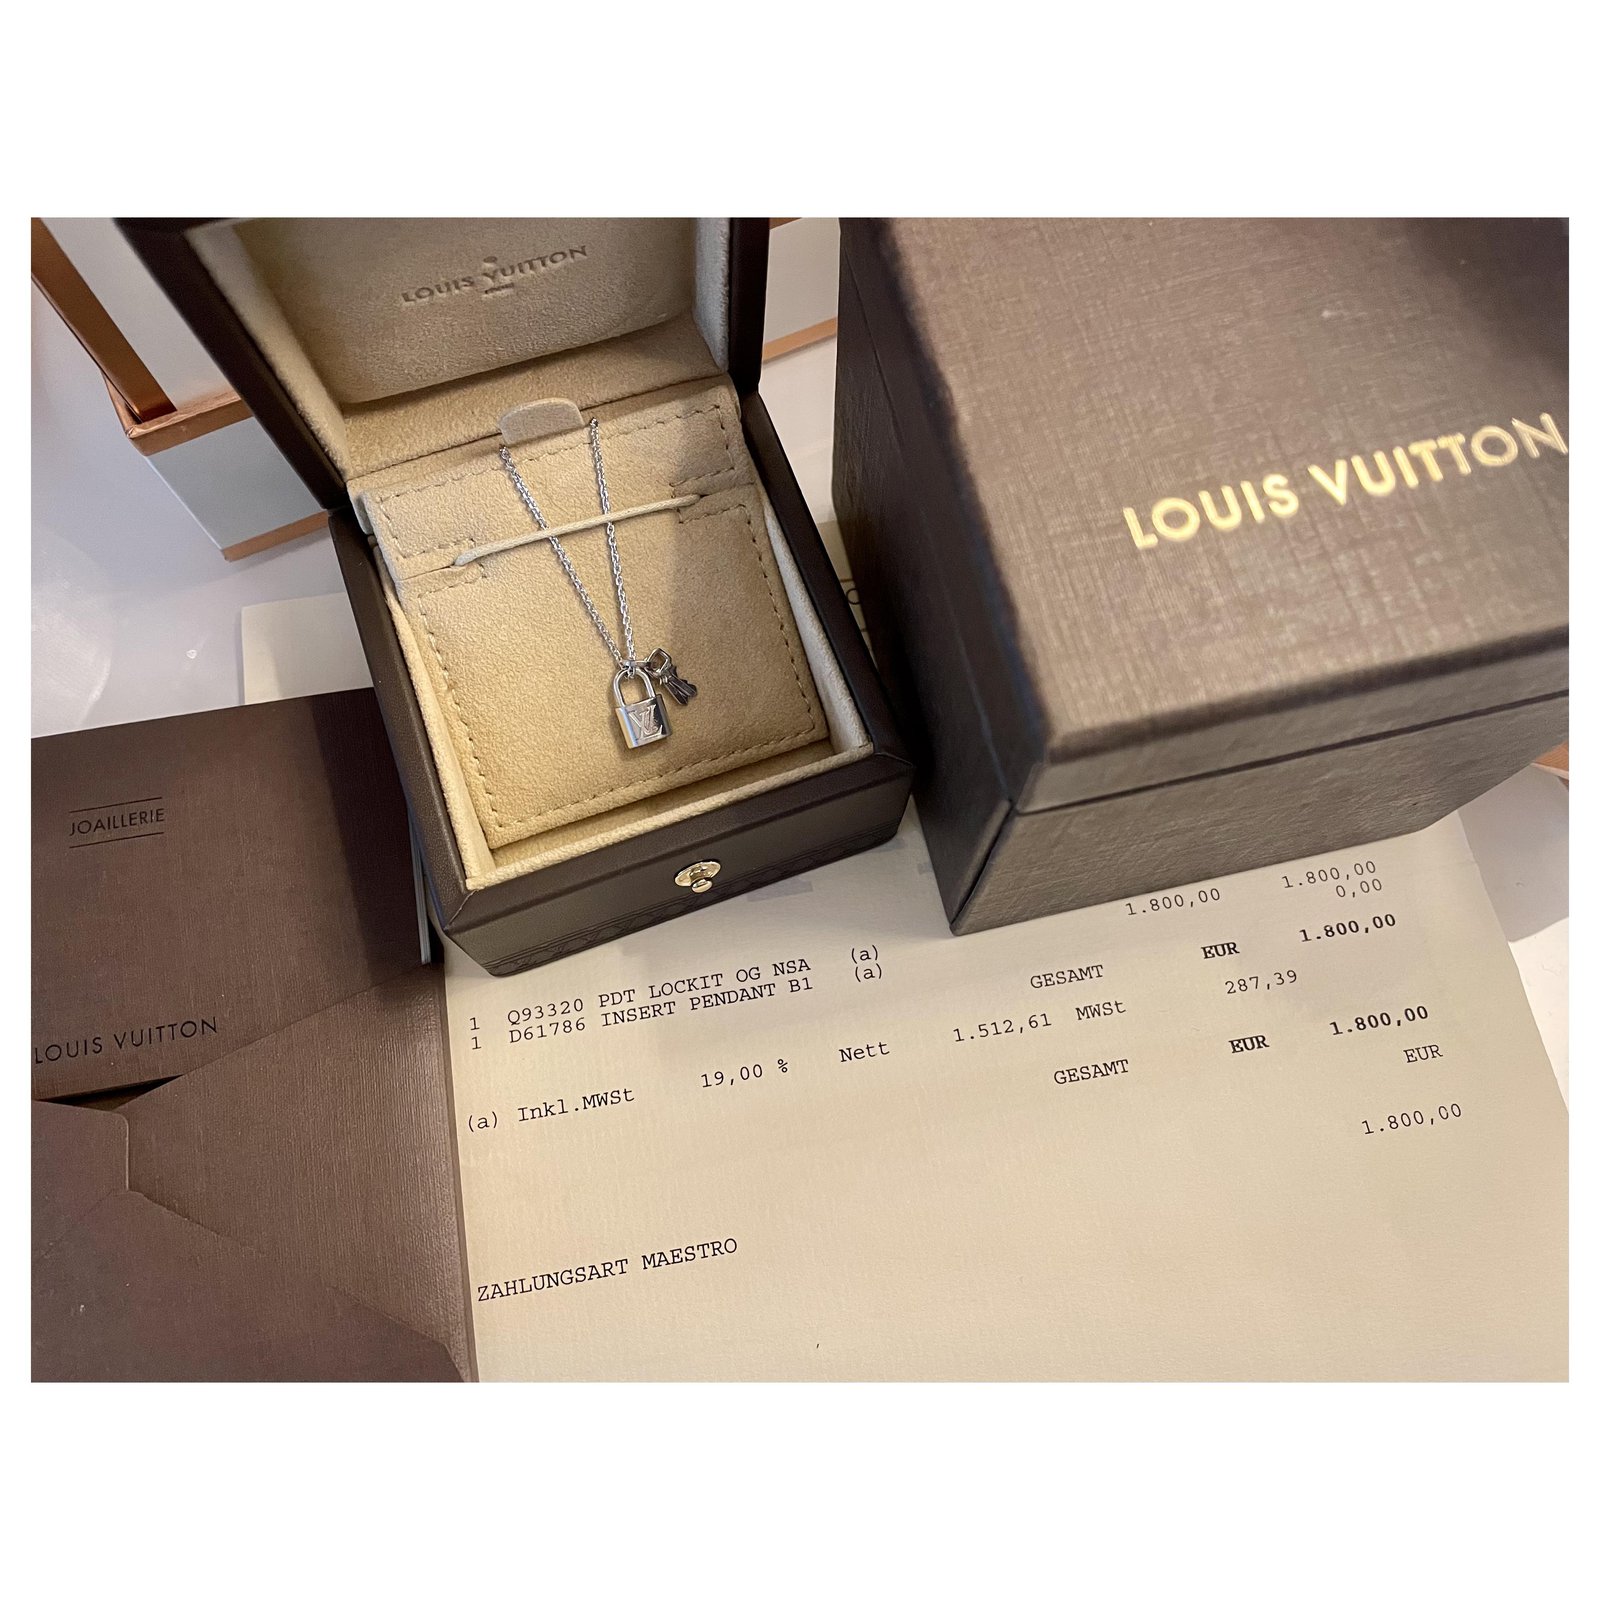 Louis Vuitton Colar de ouro branco Lockit com fechadura e pingente